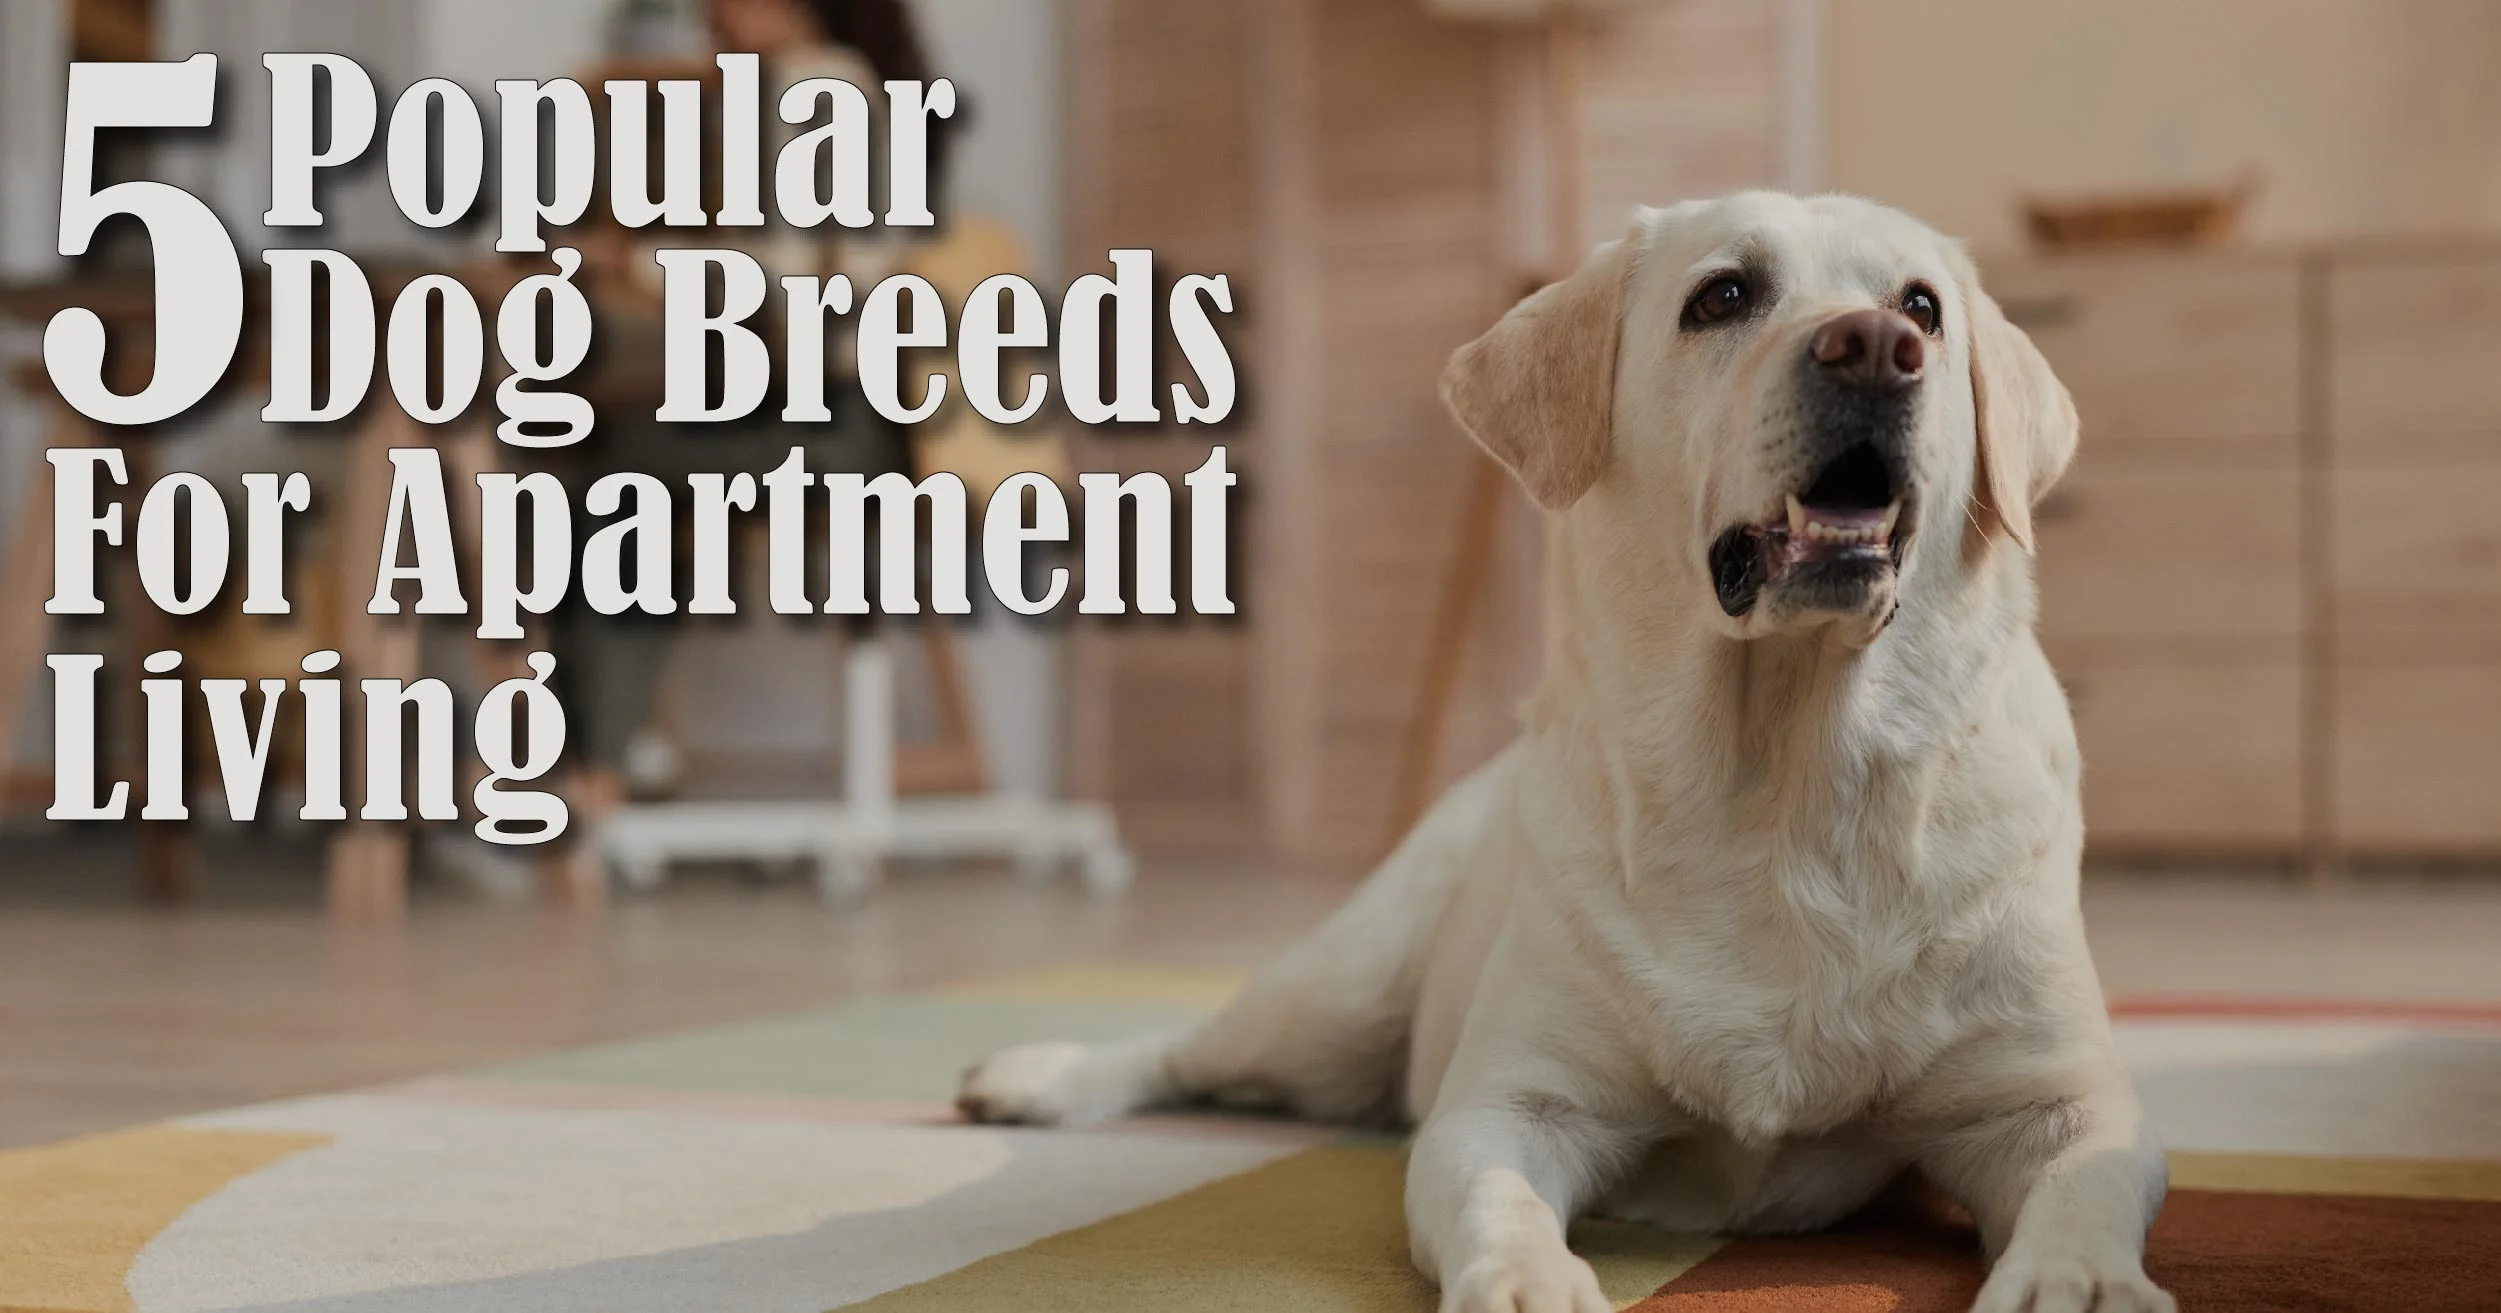 5 Popular Dog Breeds for Apartment Living